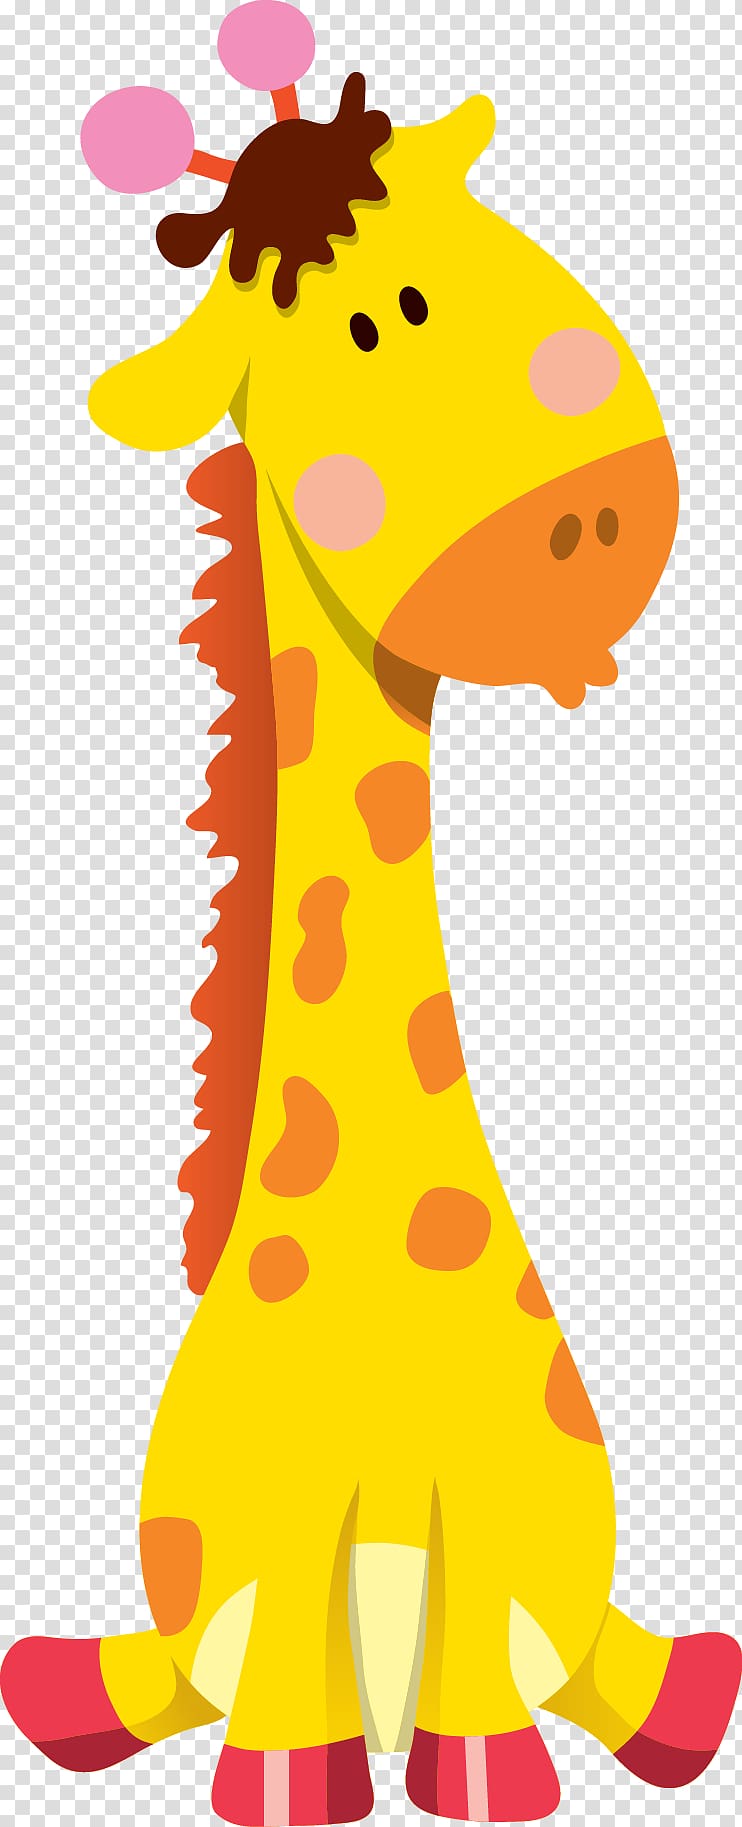 yellow giraffe illustration, Giraffe Cartoon Animal Illustration, giraffe transparent background PNG clipart